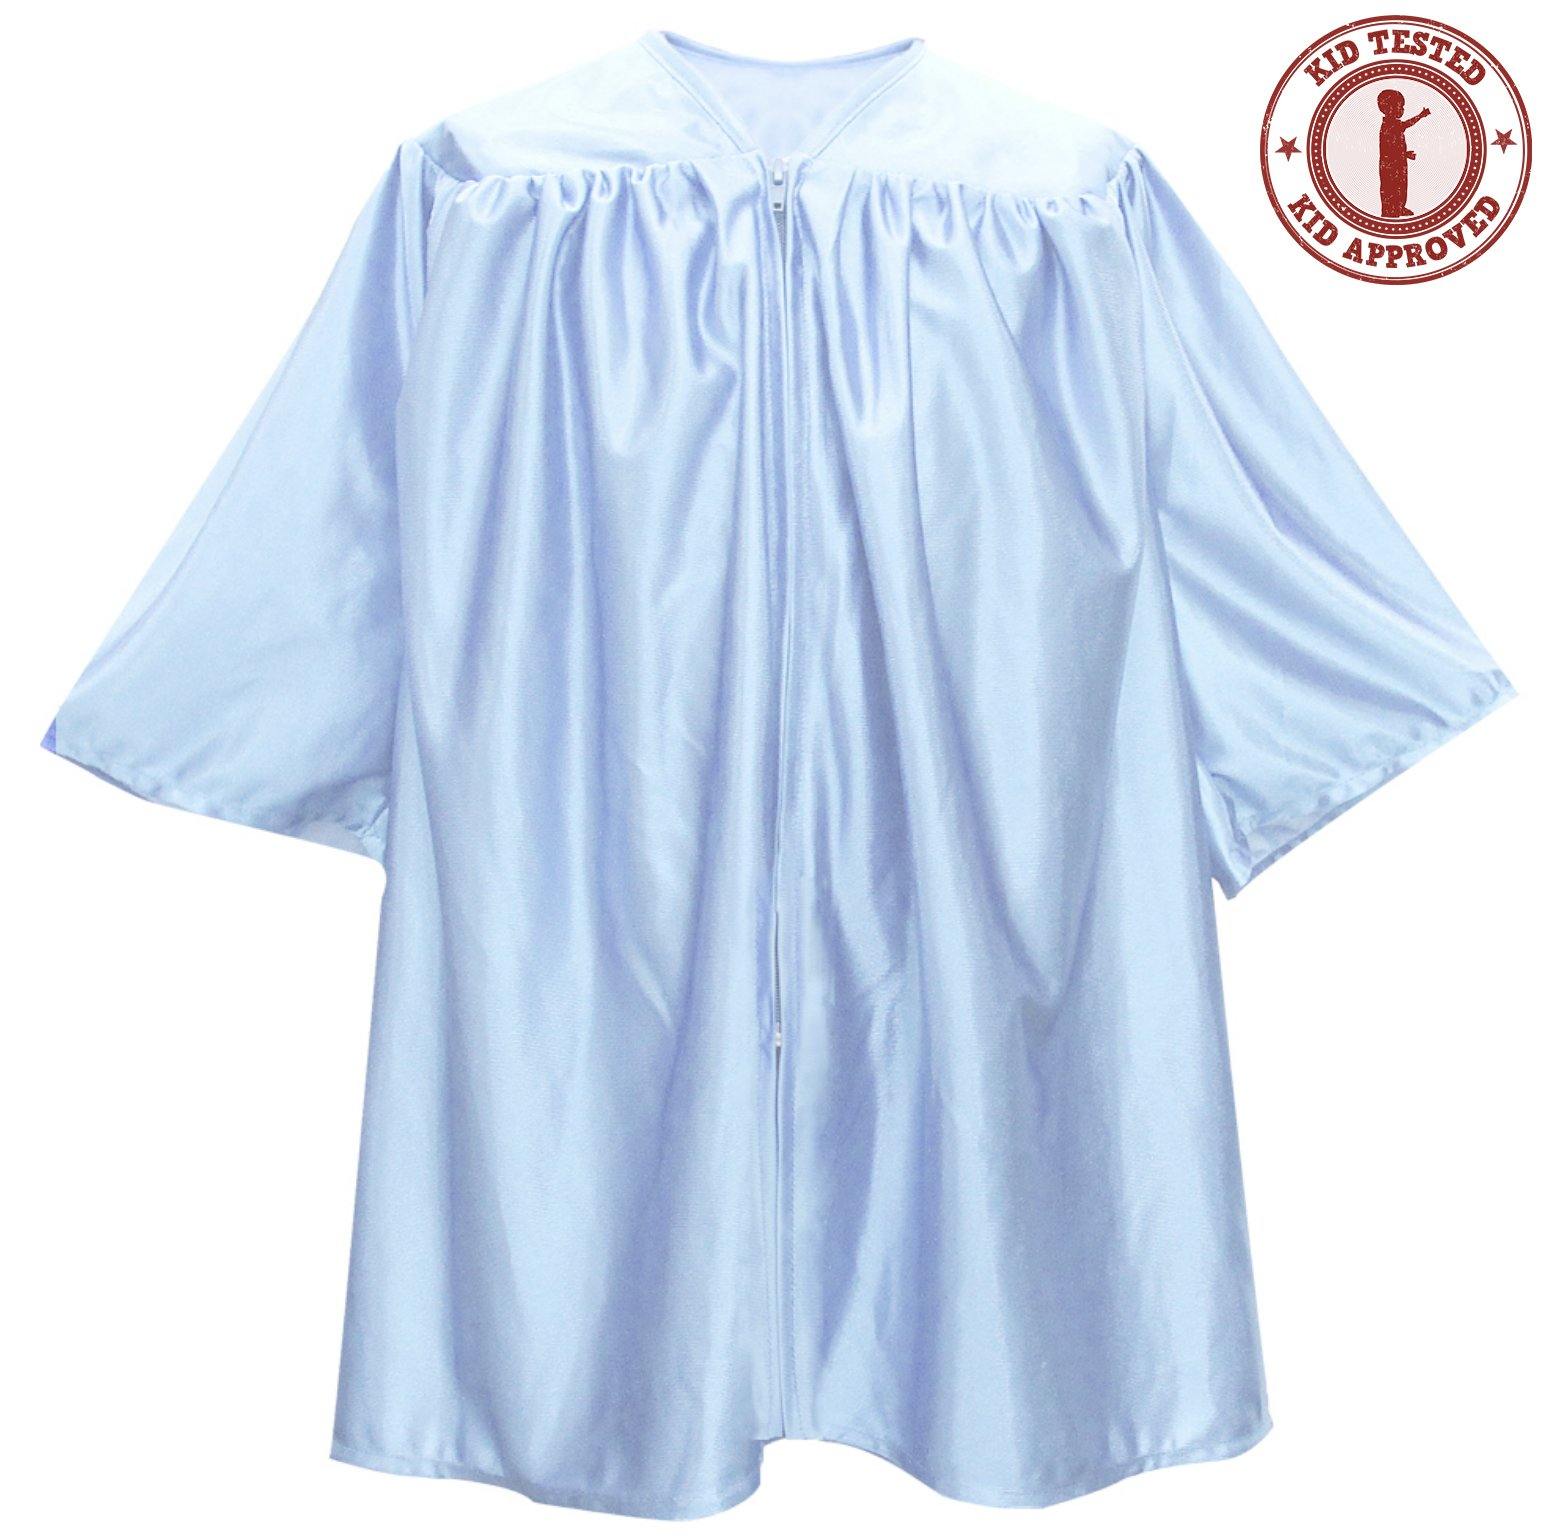 Child Light Blue Graduation Gown - Preschool & Kindergarten Gowns - Graduation Attire